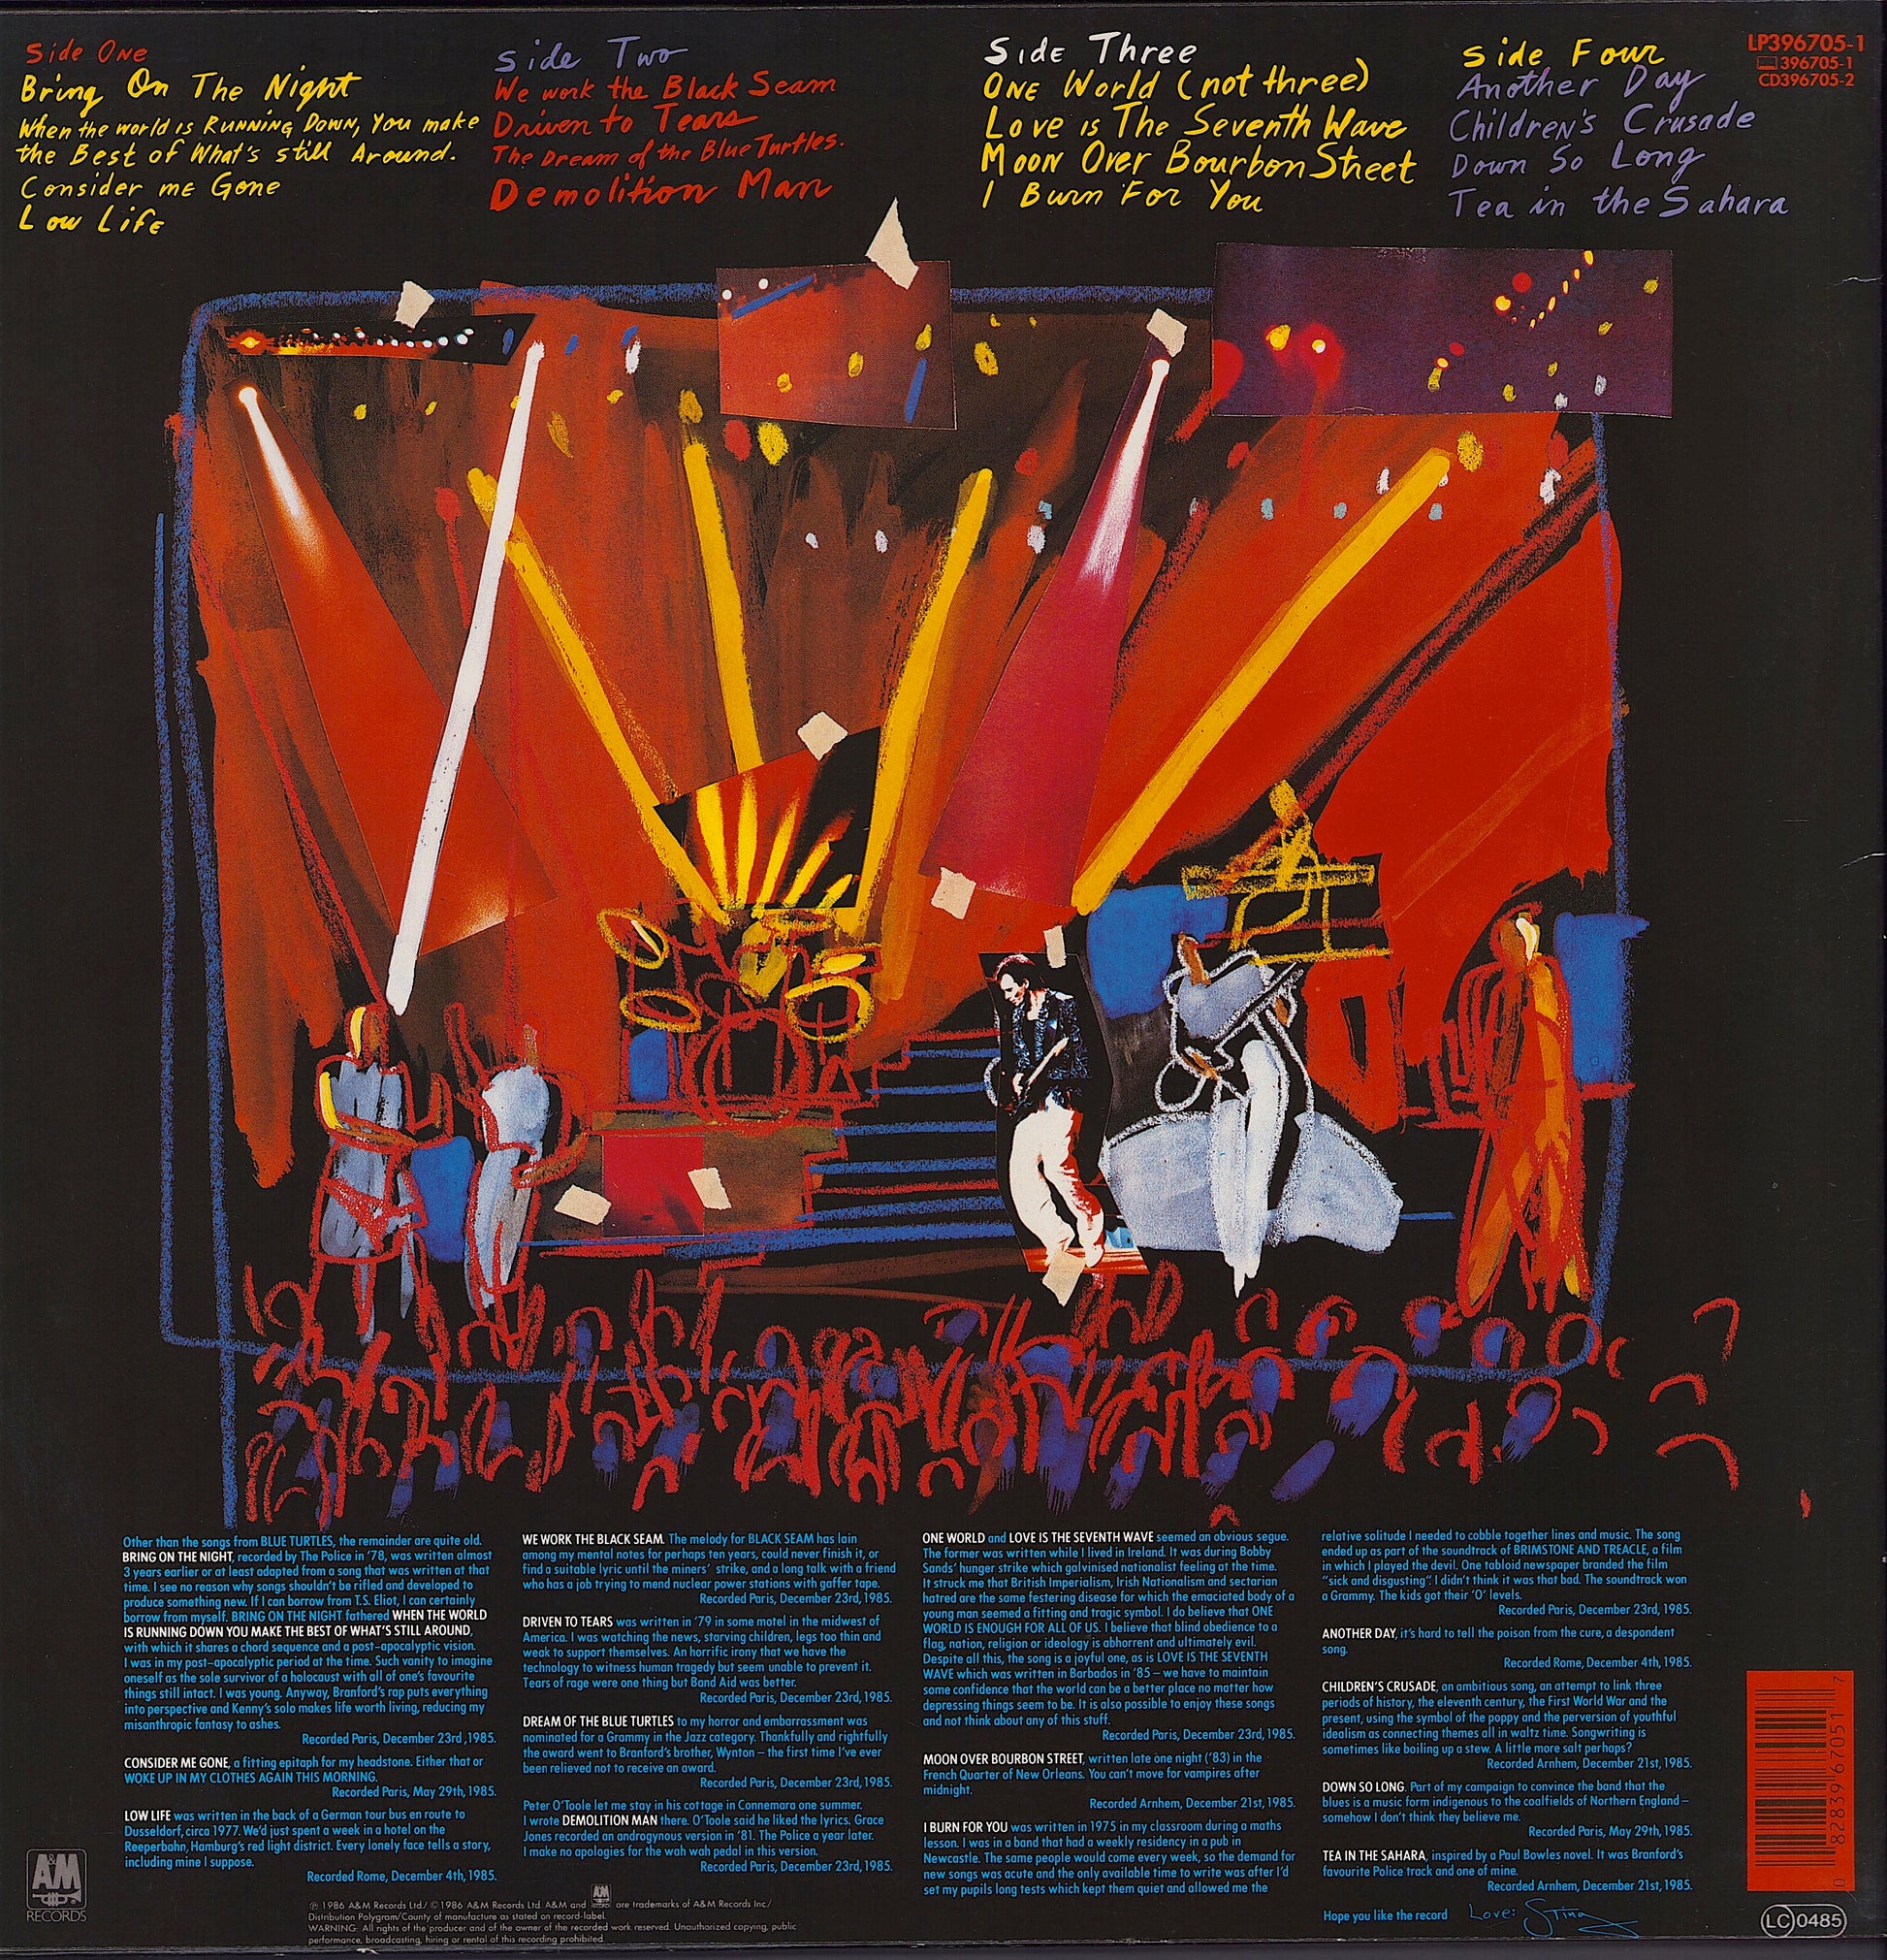 Sting - Bring On The Night Vinyl 2LP